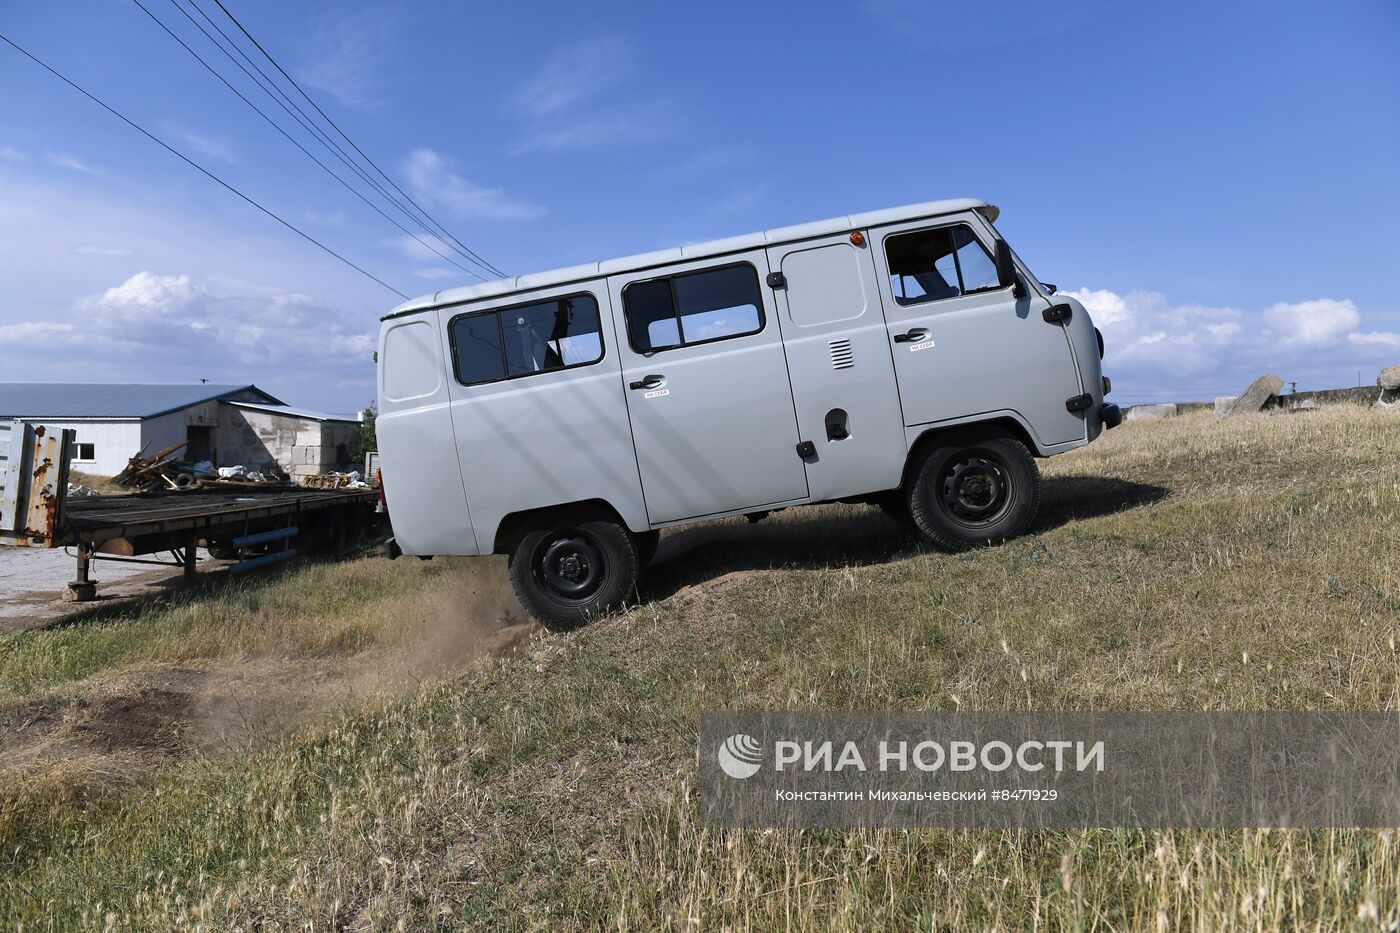 В Крыму создали электромобиль на базе УАЗ "Буханка"